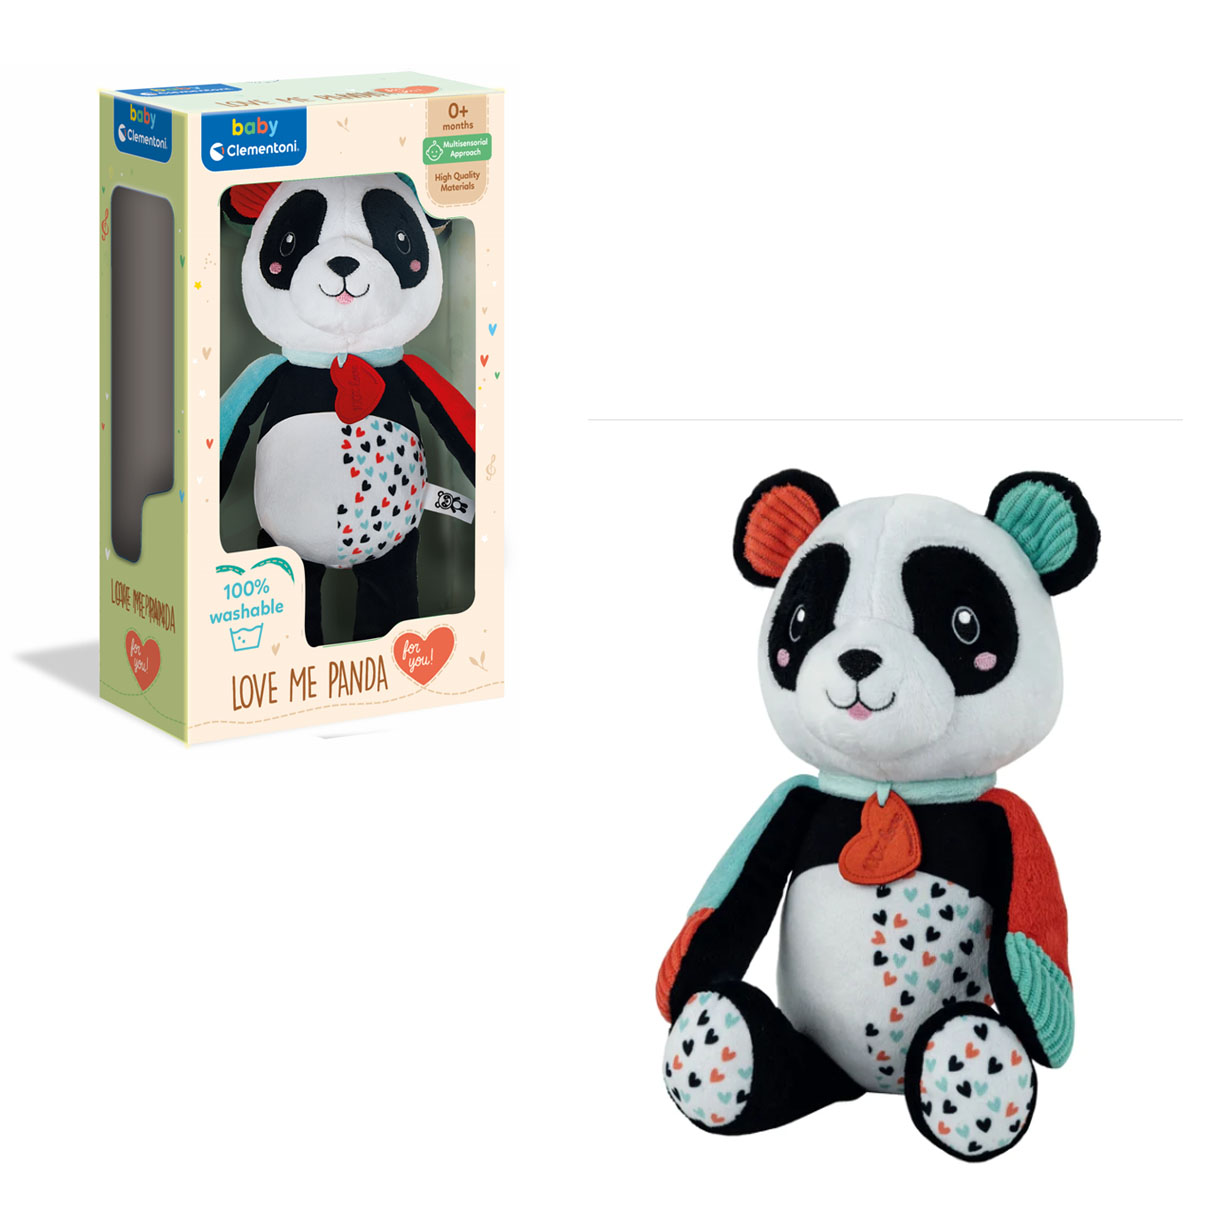 love me panda (clementoni - 17793)